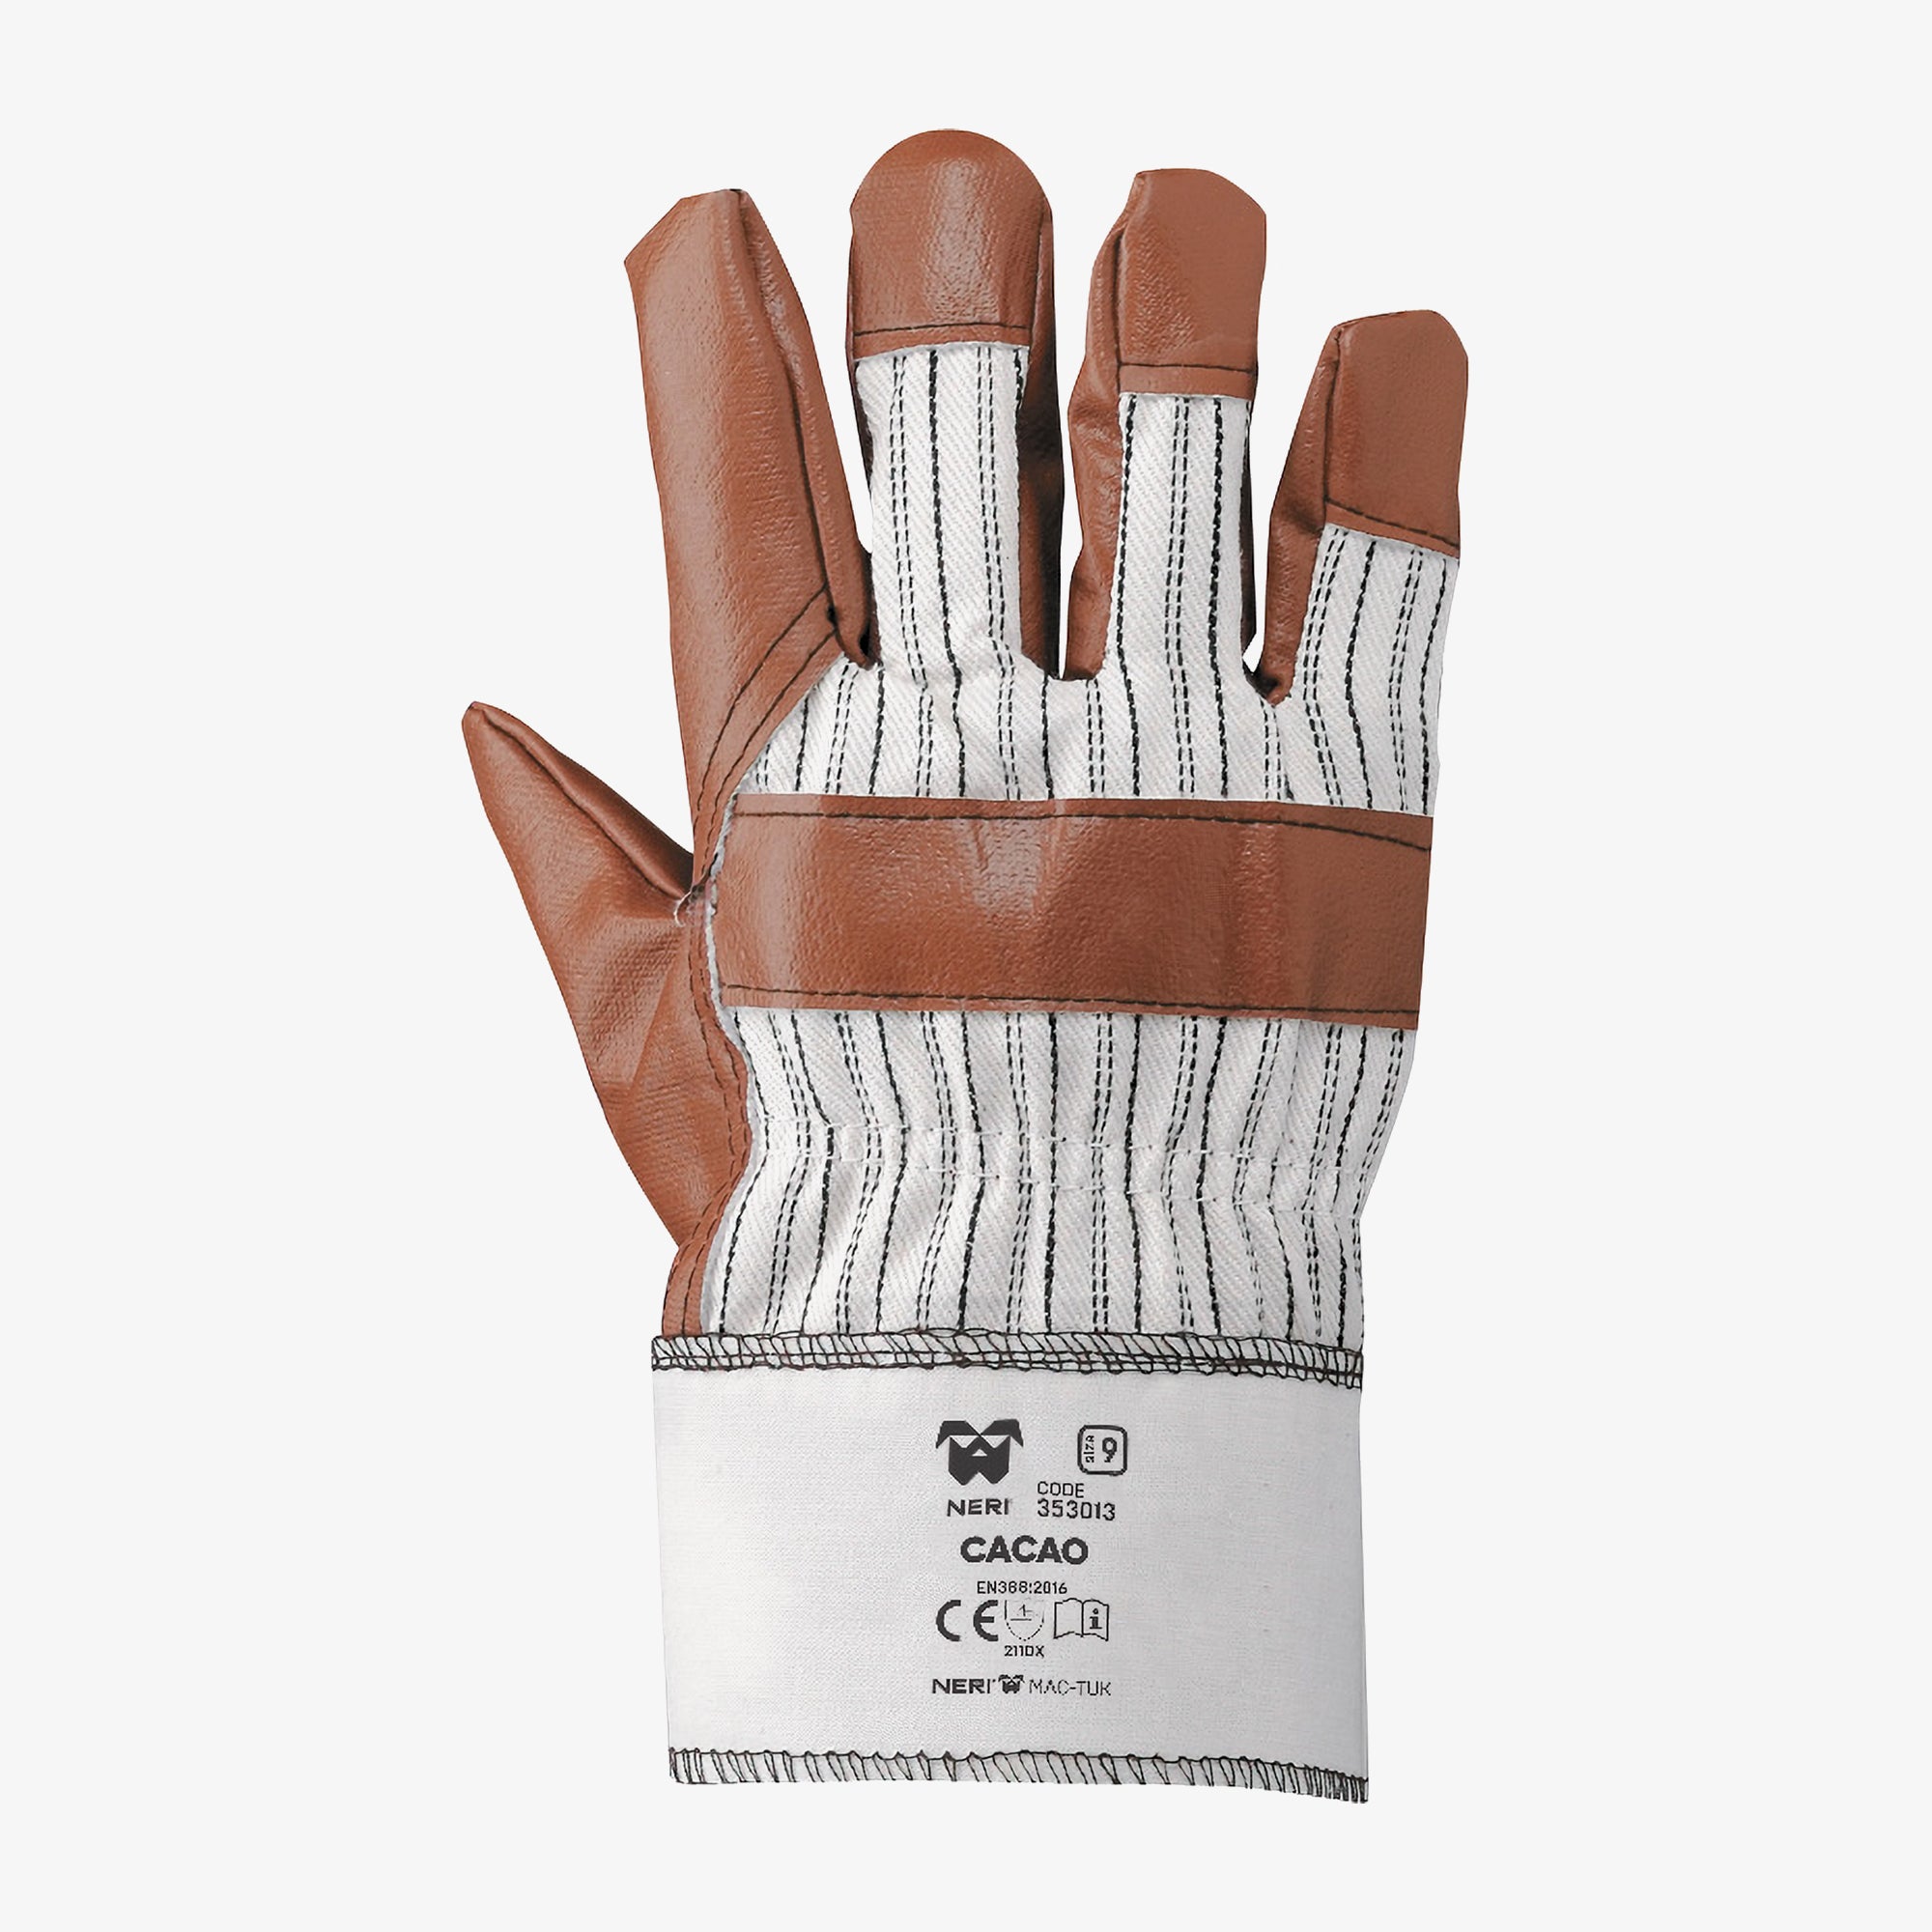 NERI Cacao 353013 Pamučne rukavice s nitrilnim premazom